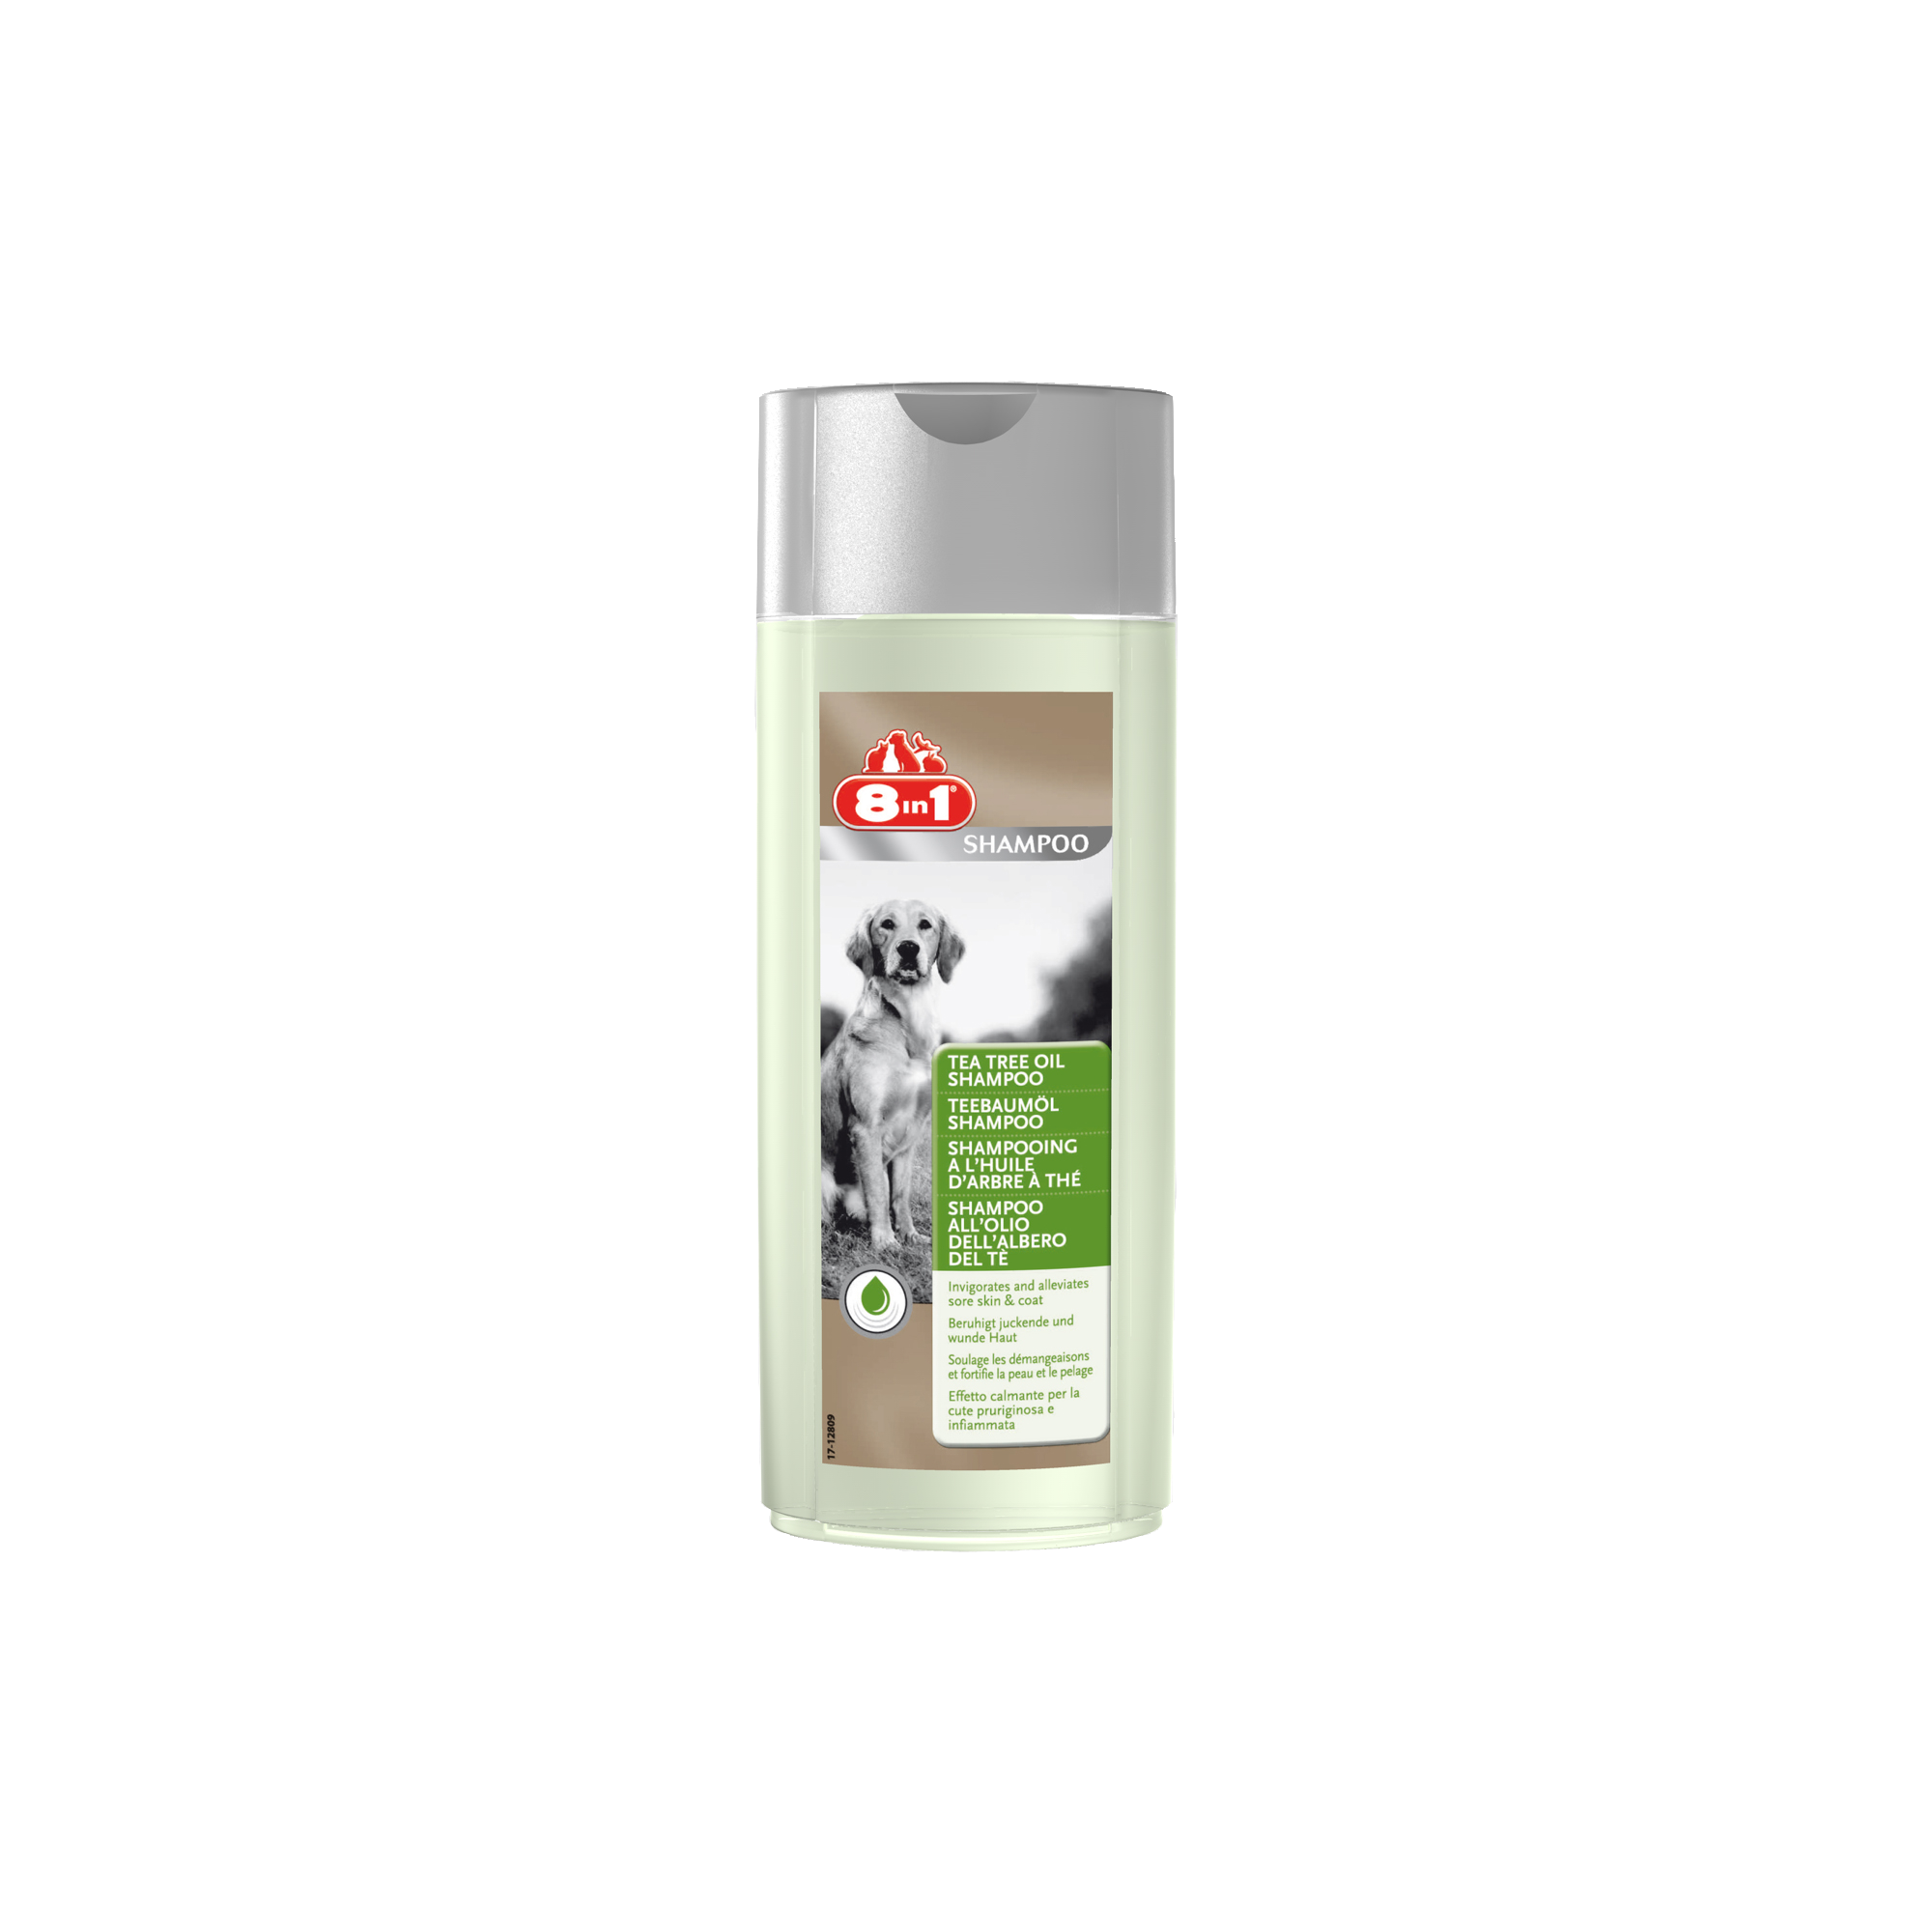 8in1 Teebaumöl Shampoo 250ml + product picture